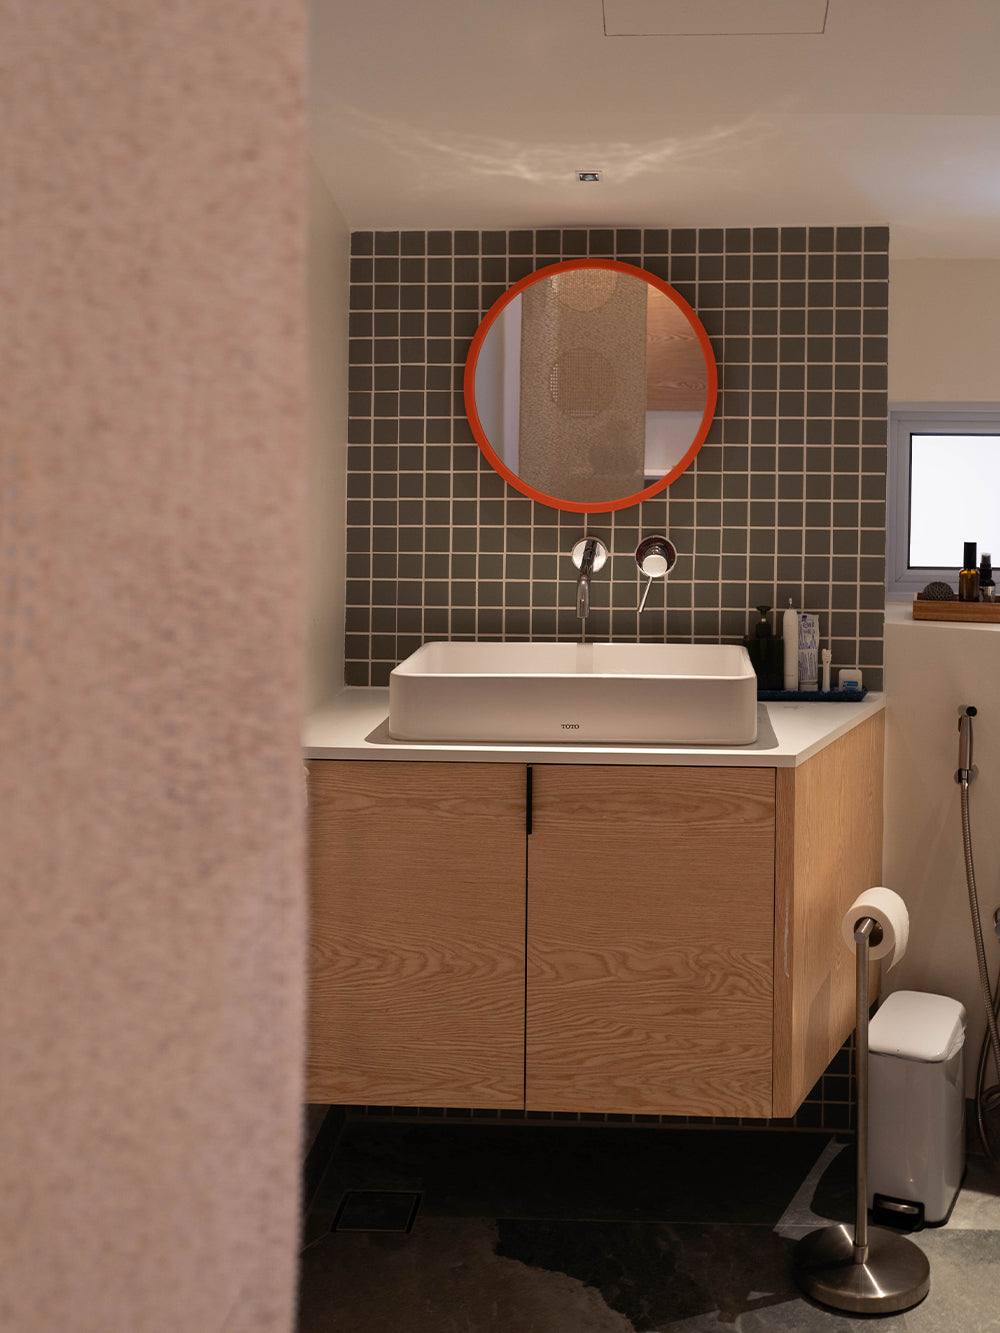 SOJAO-house-to-home-tour-journal-loftandorder-bathroom-counter-design.jpg